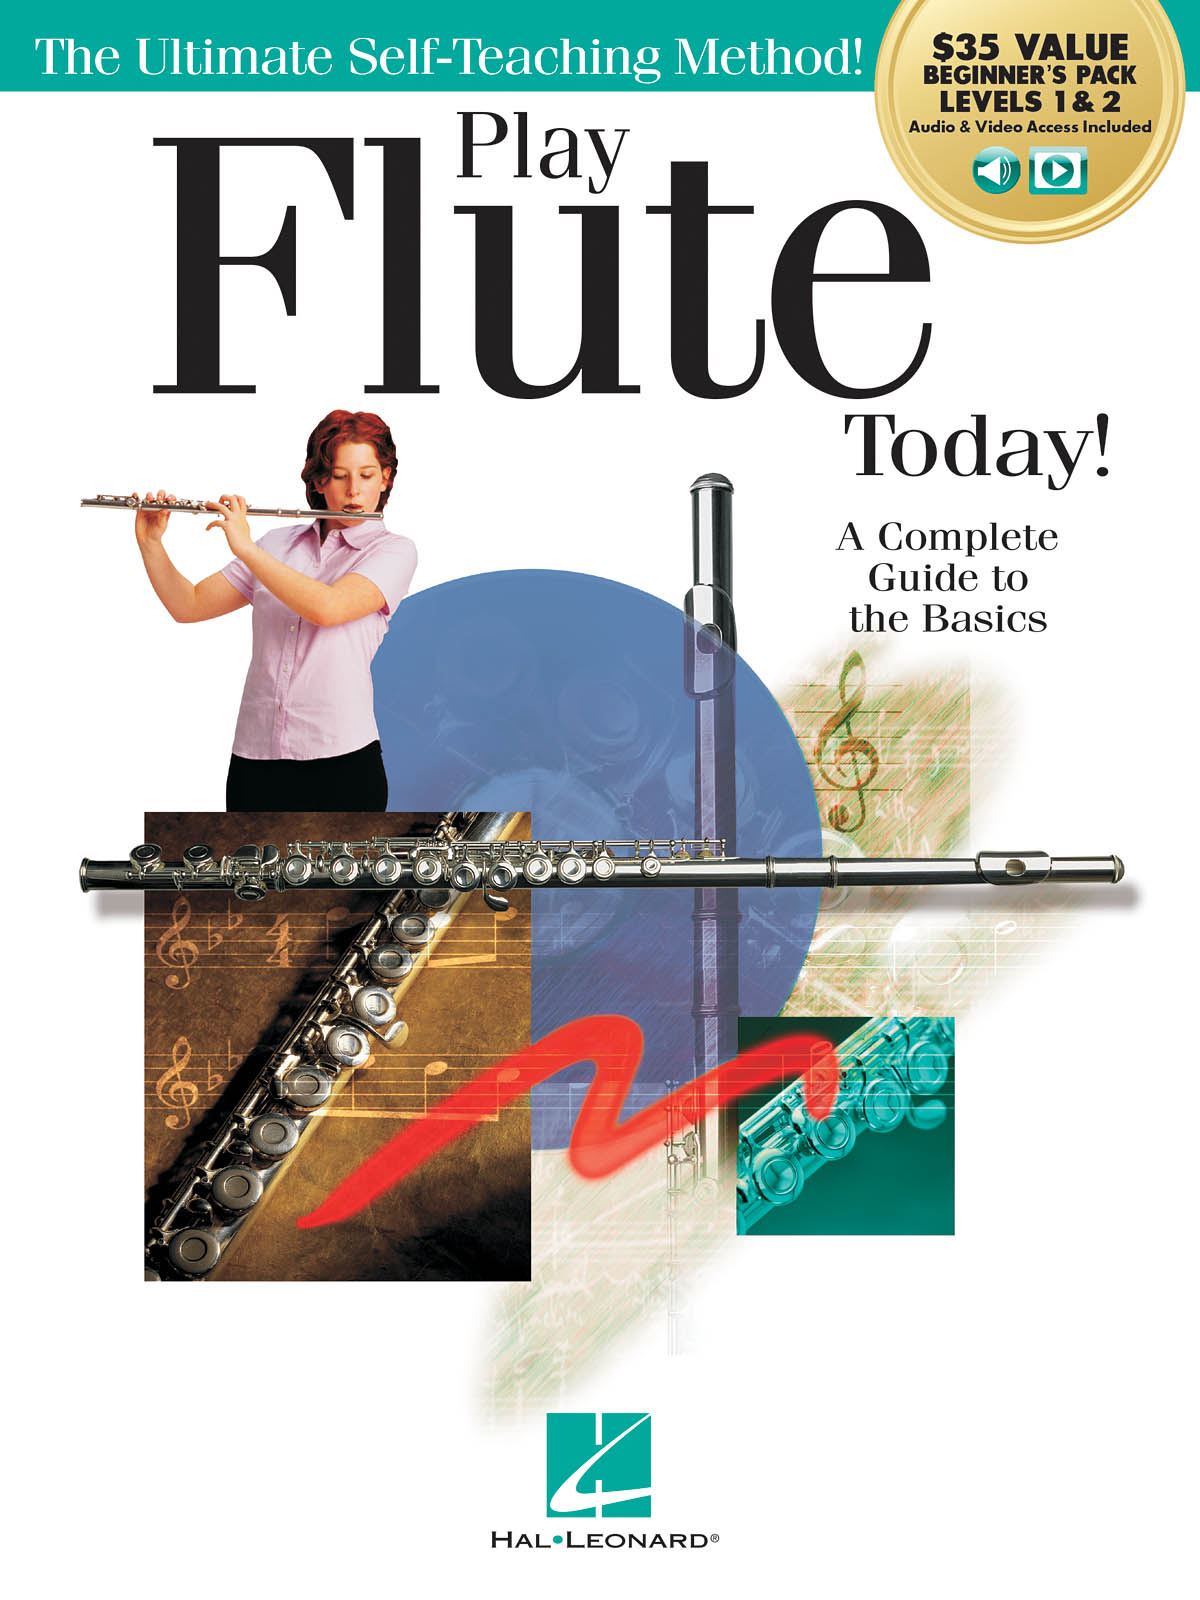 Playing flute. Play the Flute. Книги о флейте. Flute Player meme.